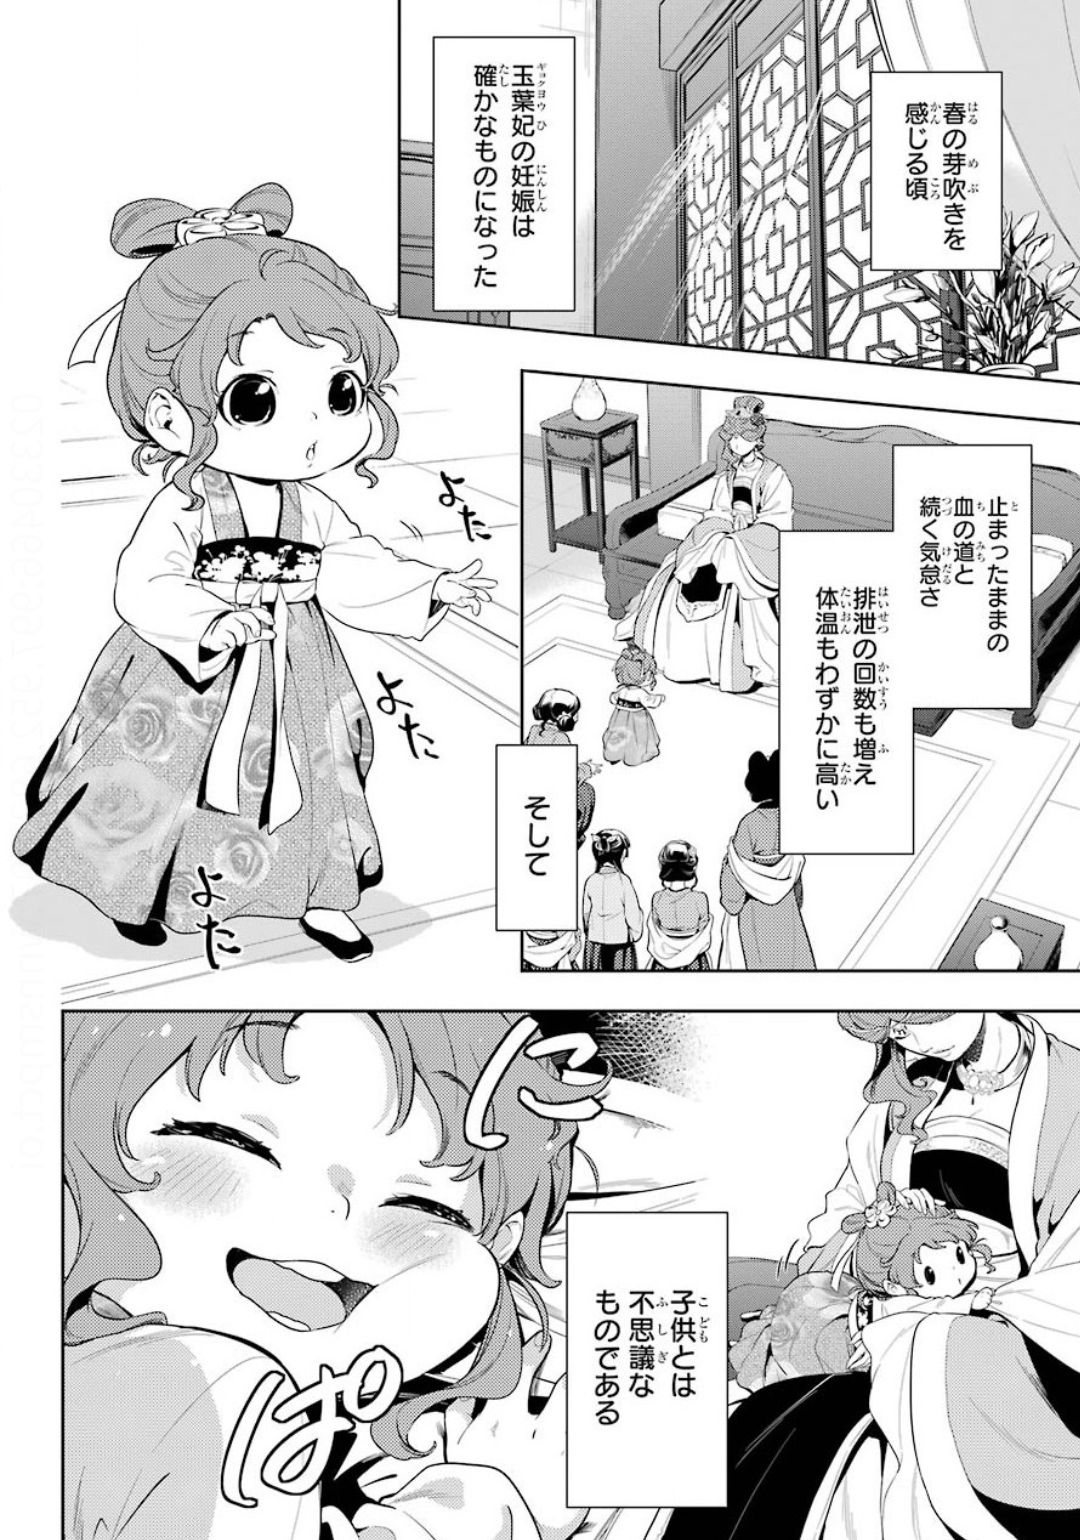 Kusuriya no Hitorigoto - Chapter 36.1 - Page 2